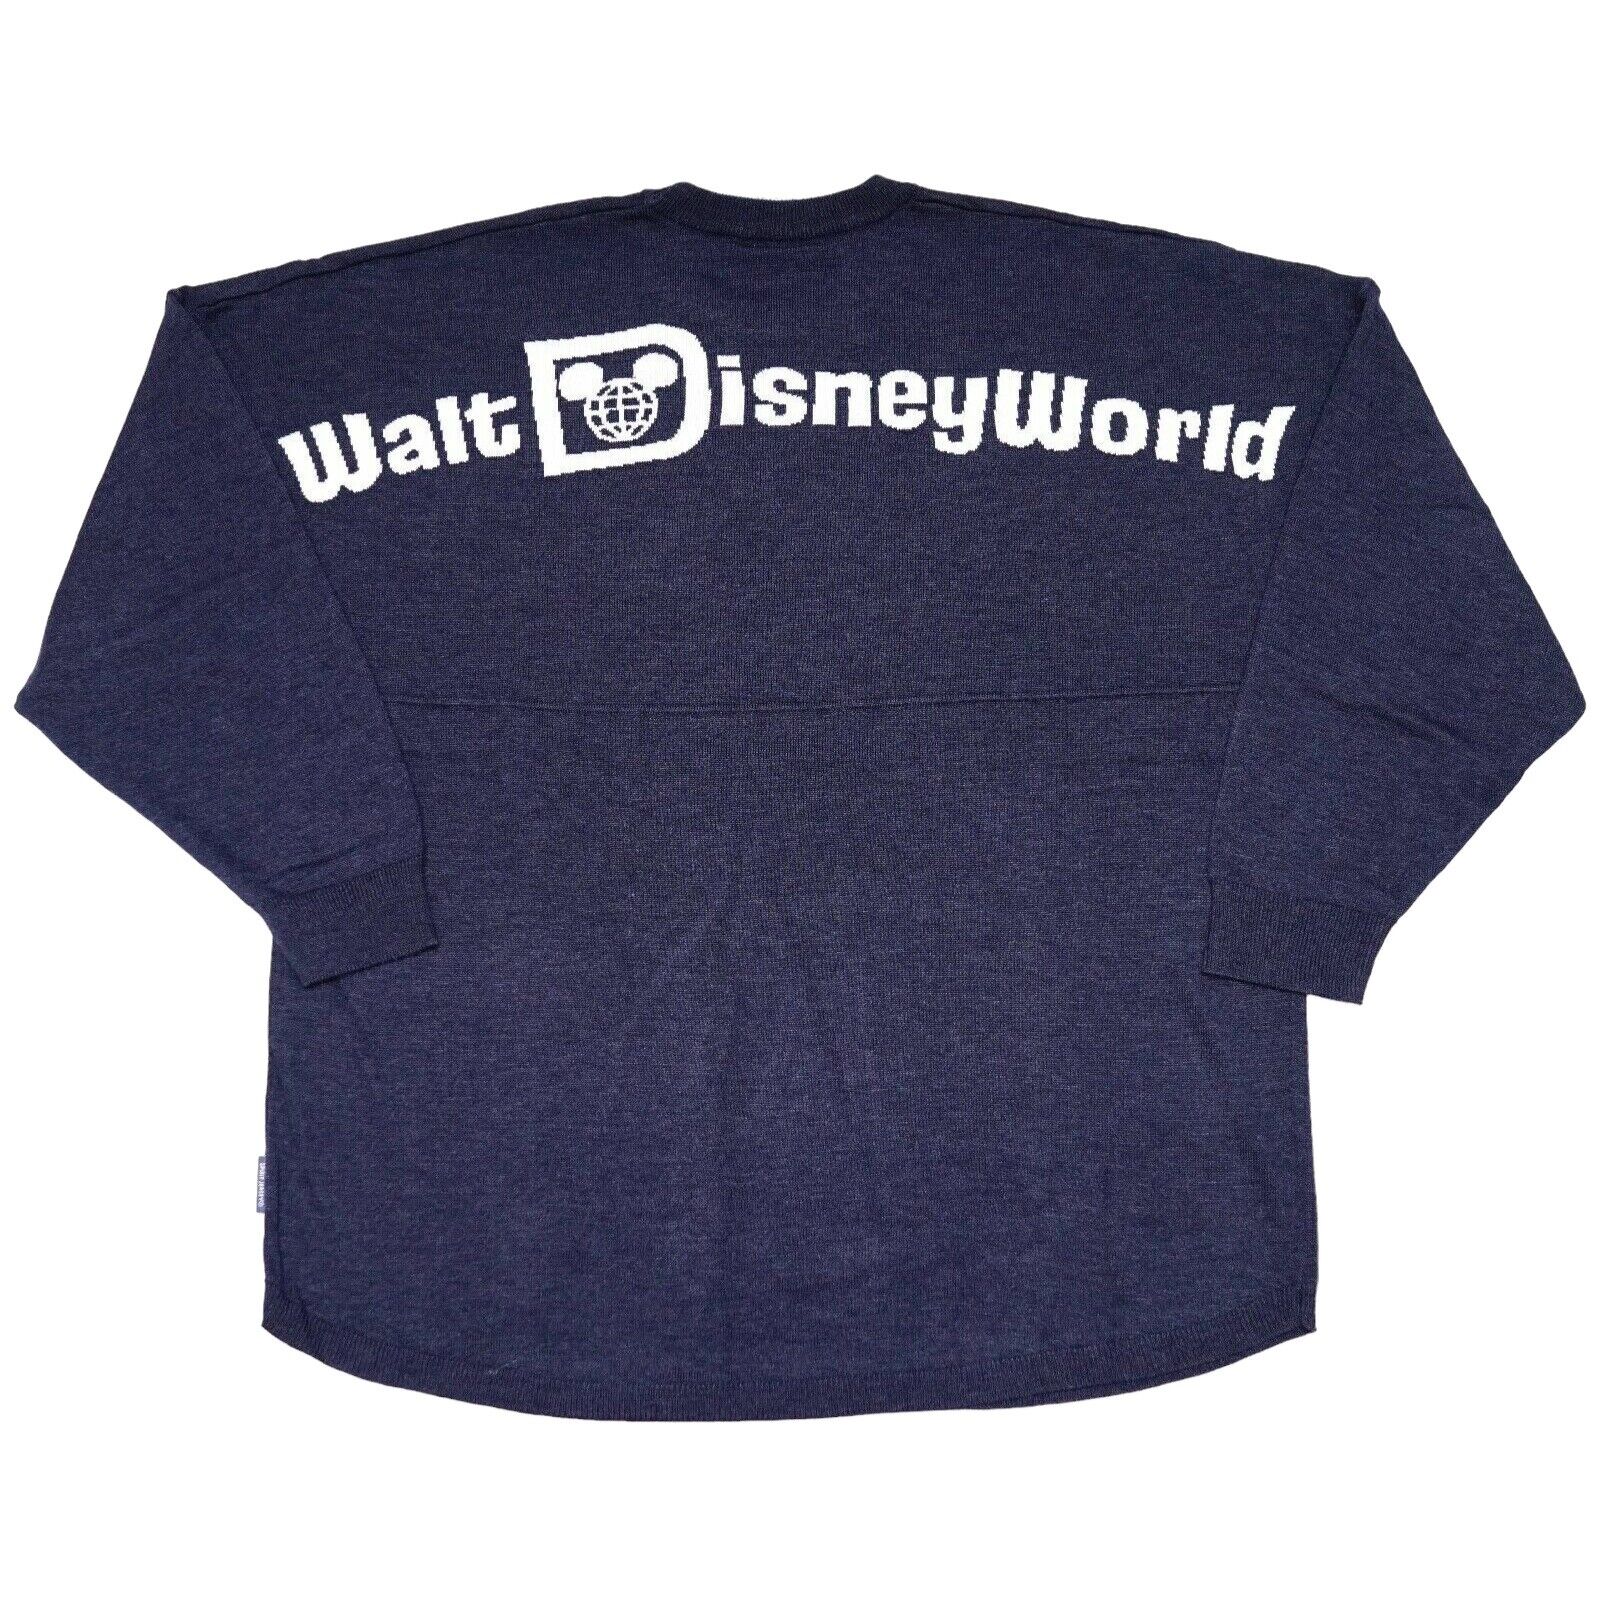 2019 Disney Parks Walt Disney World Knitted Sweater Spirit Jersey XL